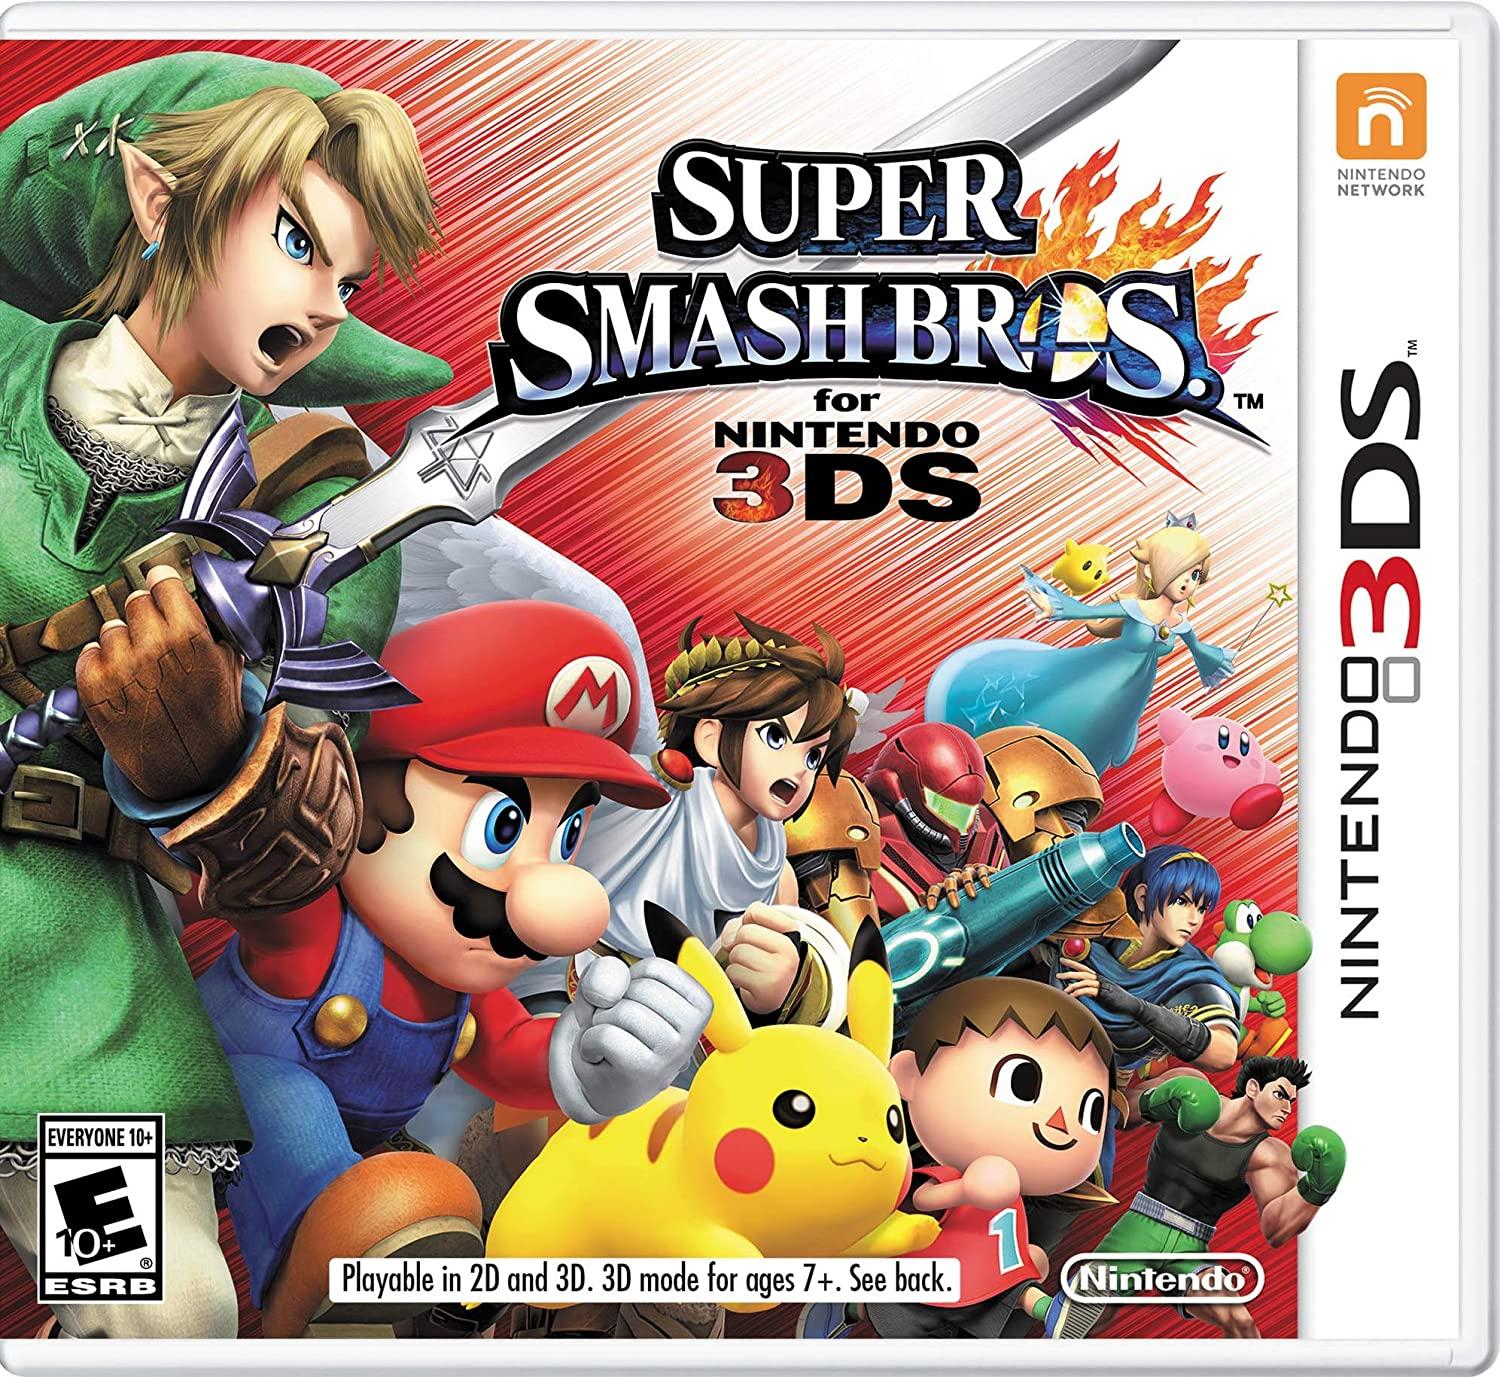 Super Smash Bros 3DS for $9.99